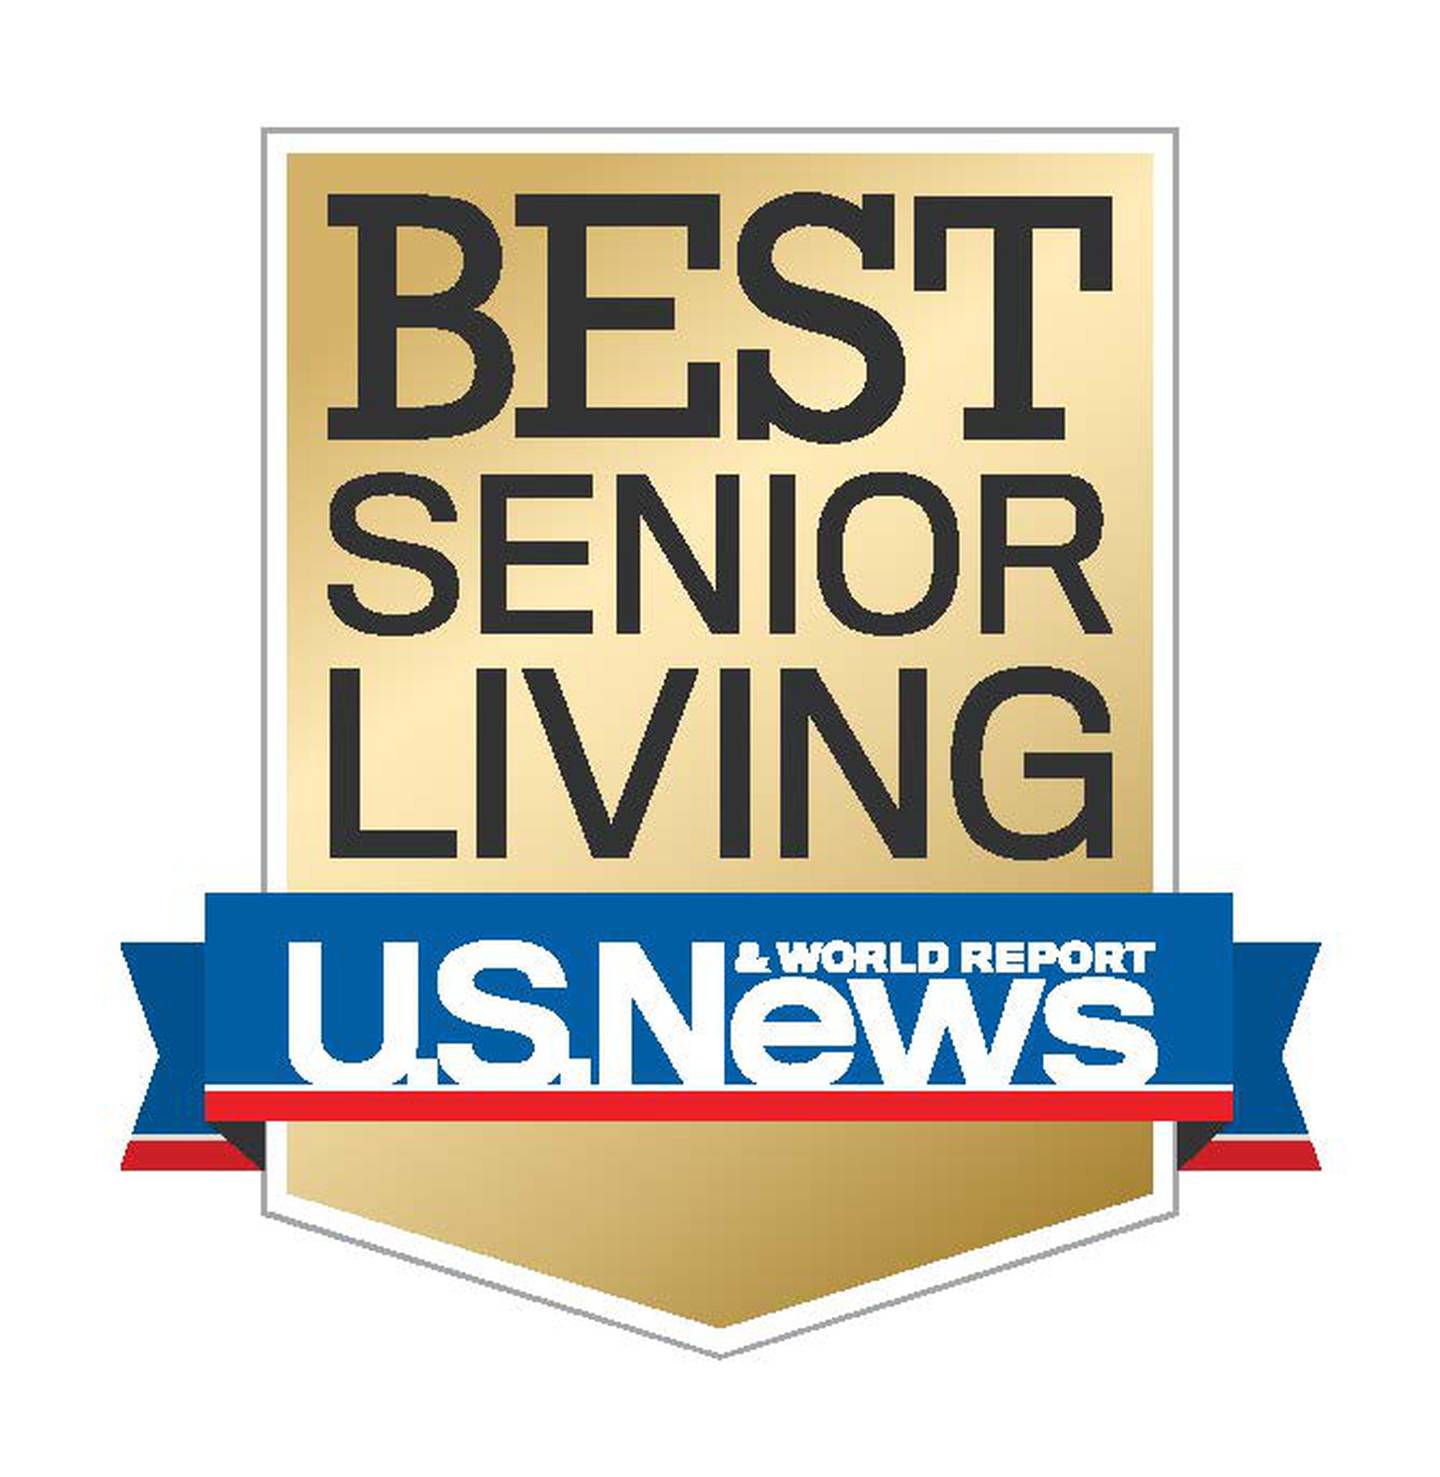 U.S. News and World Report Best Senior Living badge